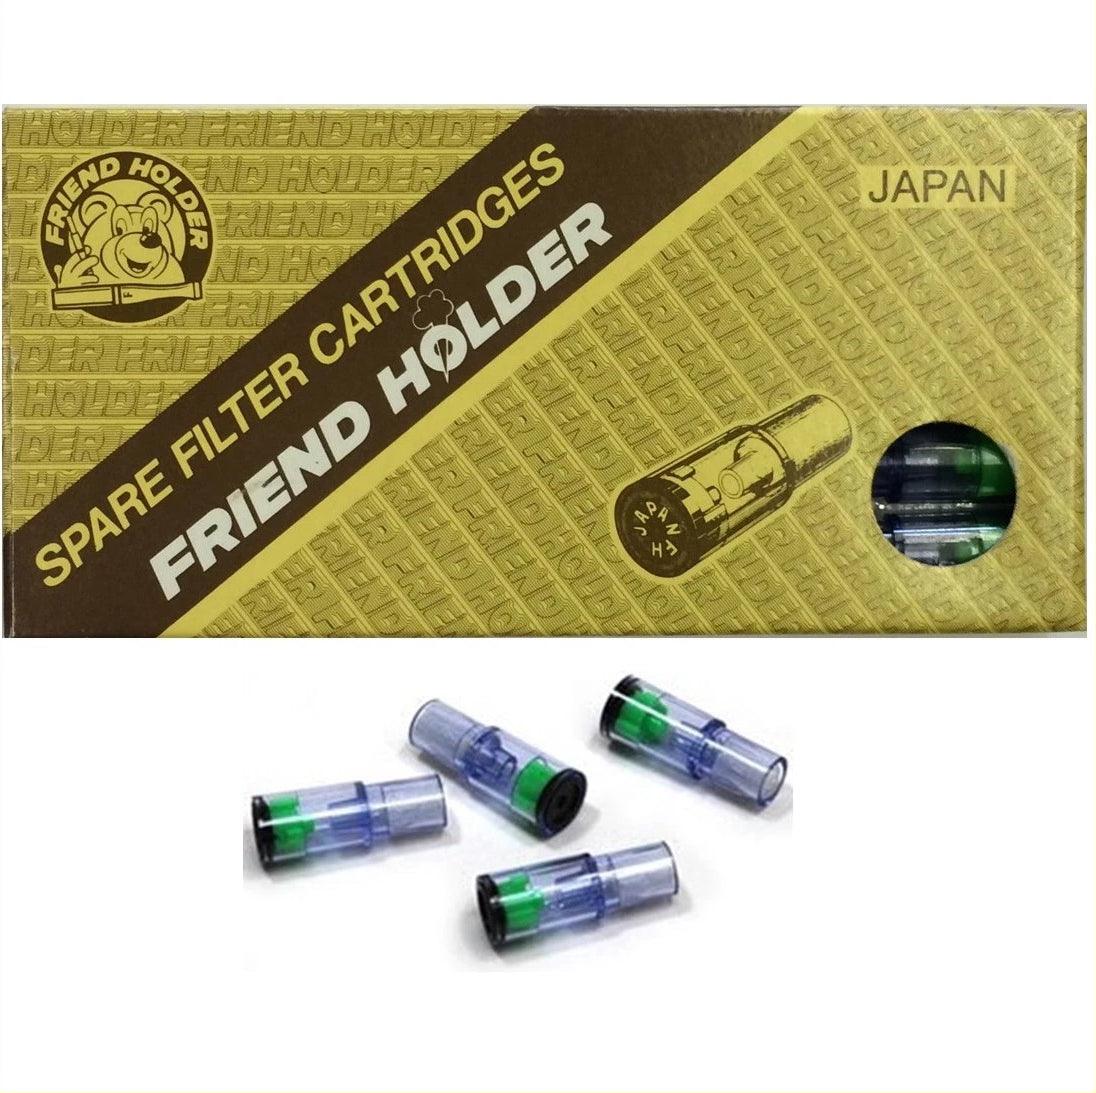 2 packs  x 20 = 40  Friend Holder Spare Filter Cartridges